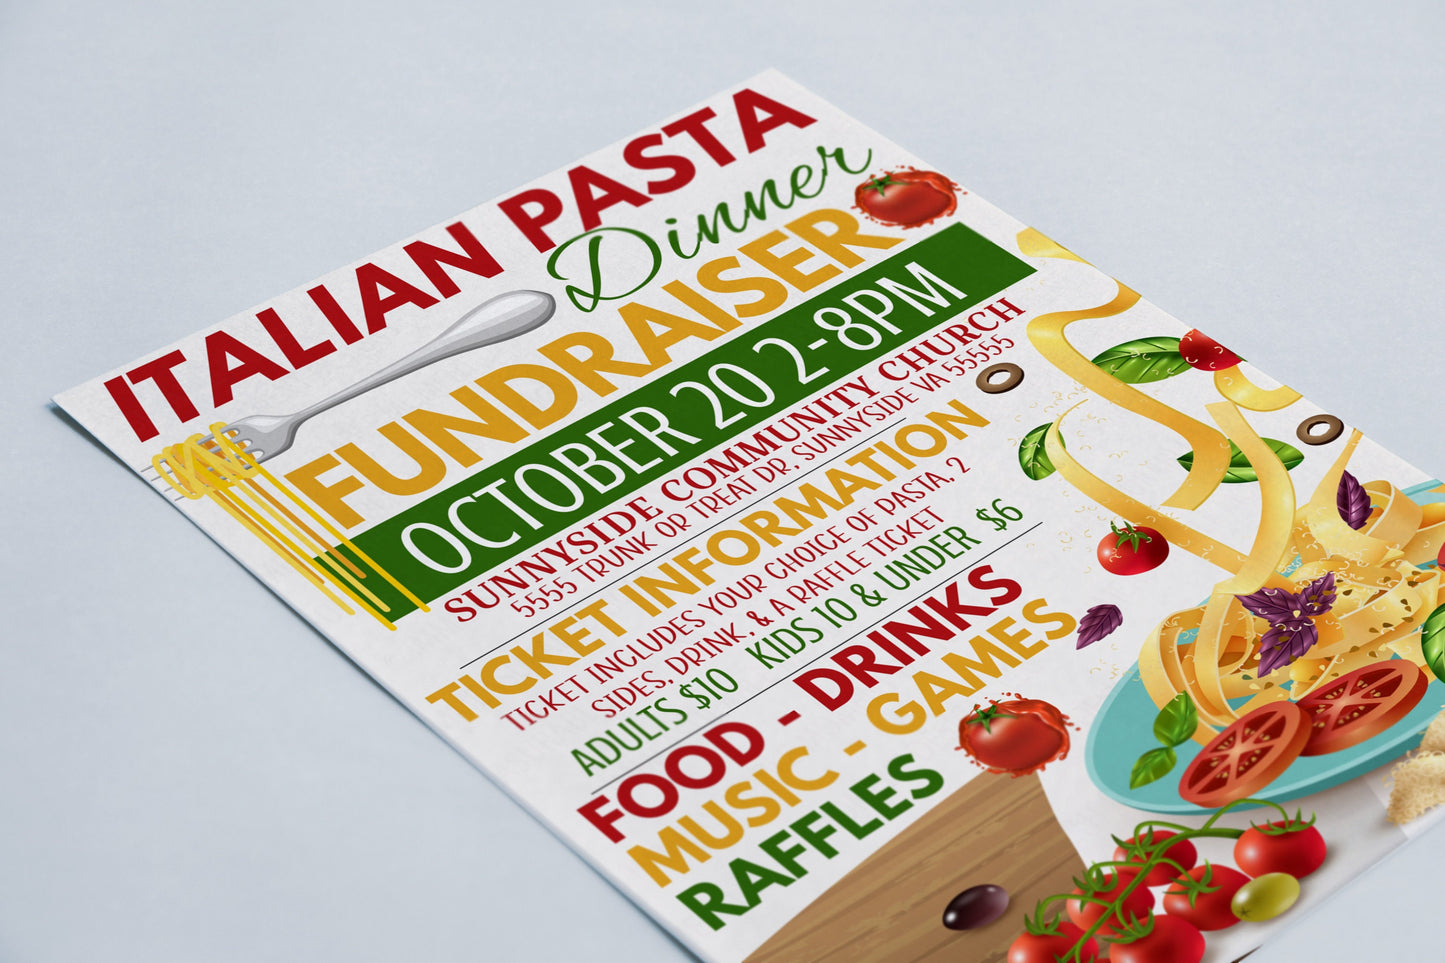 Editable Pasta Fundraiser Flyer, Spaghetti Italian Dinner Fundraising Invitation, School Church Business Charity Invite, PTA PTO Printable